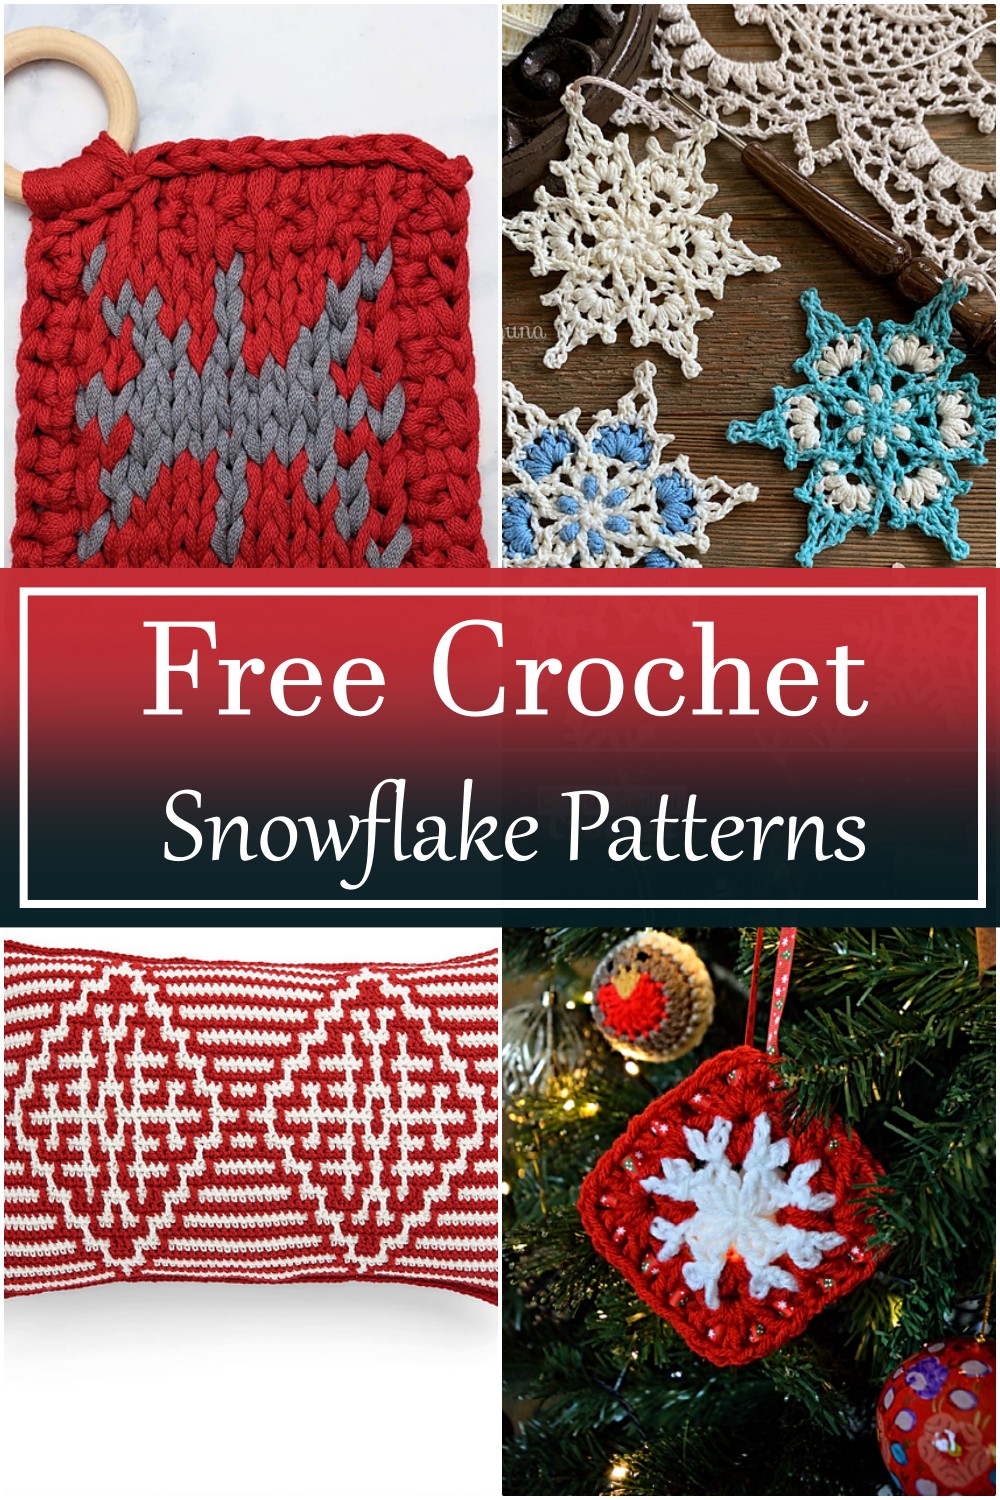 10 Free Crochet Snowflake Patterns